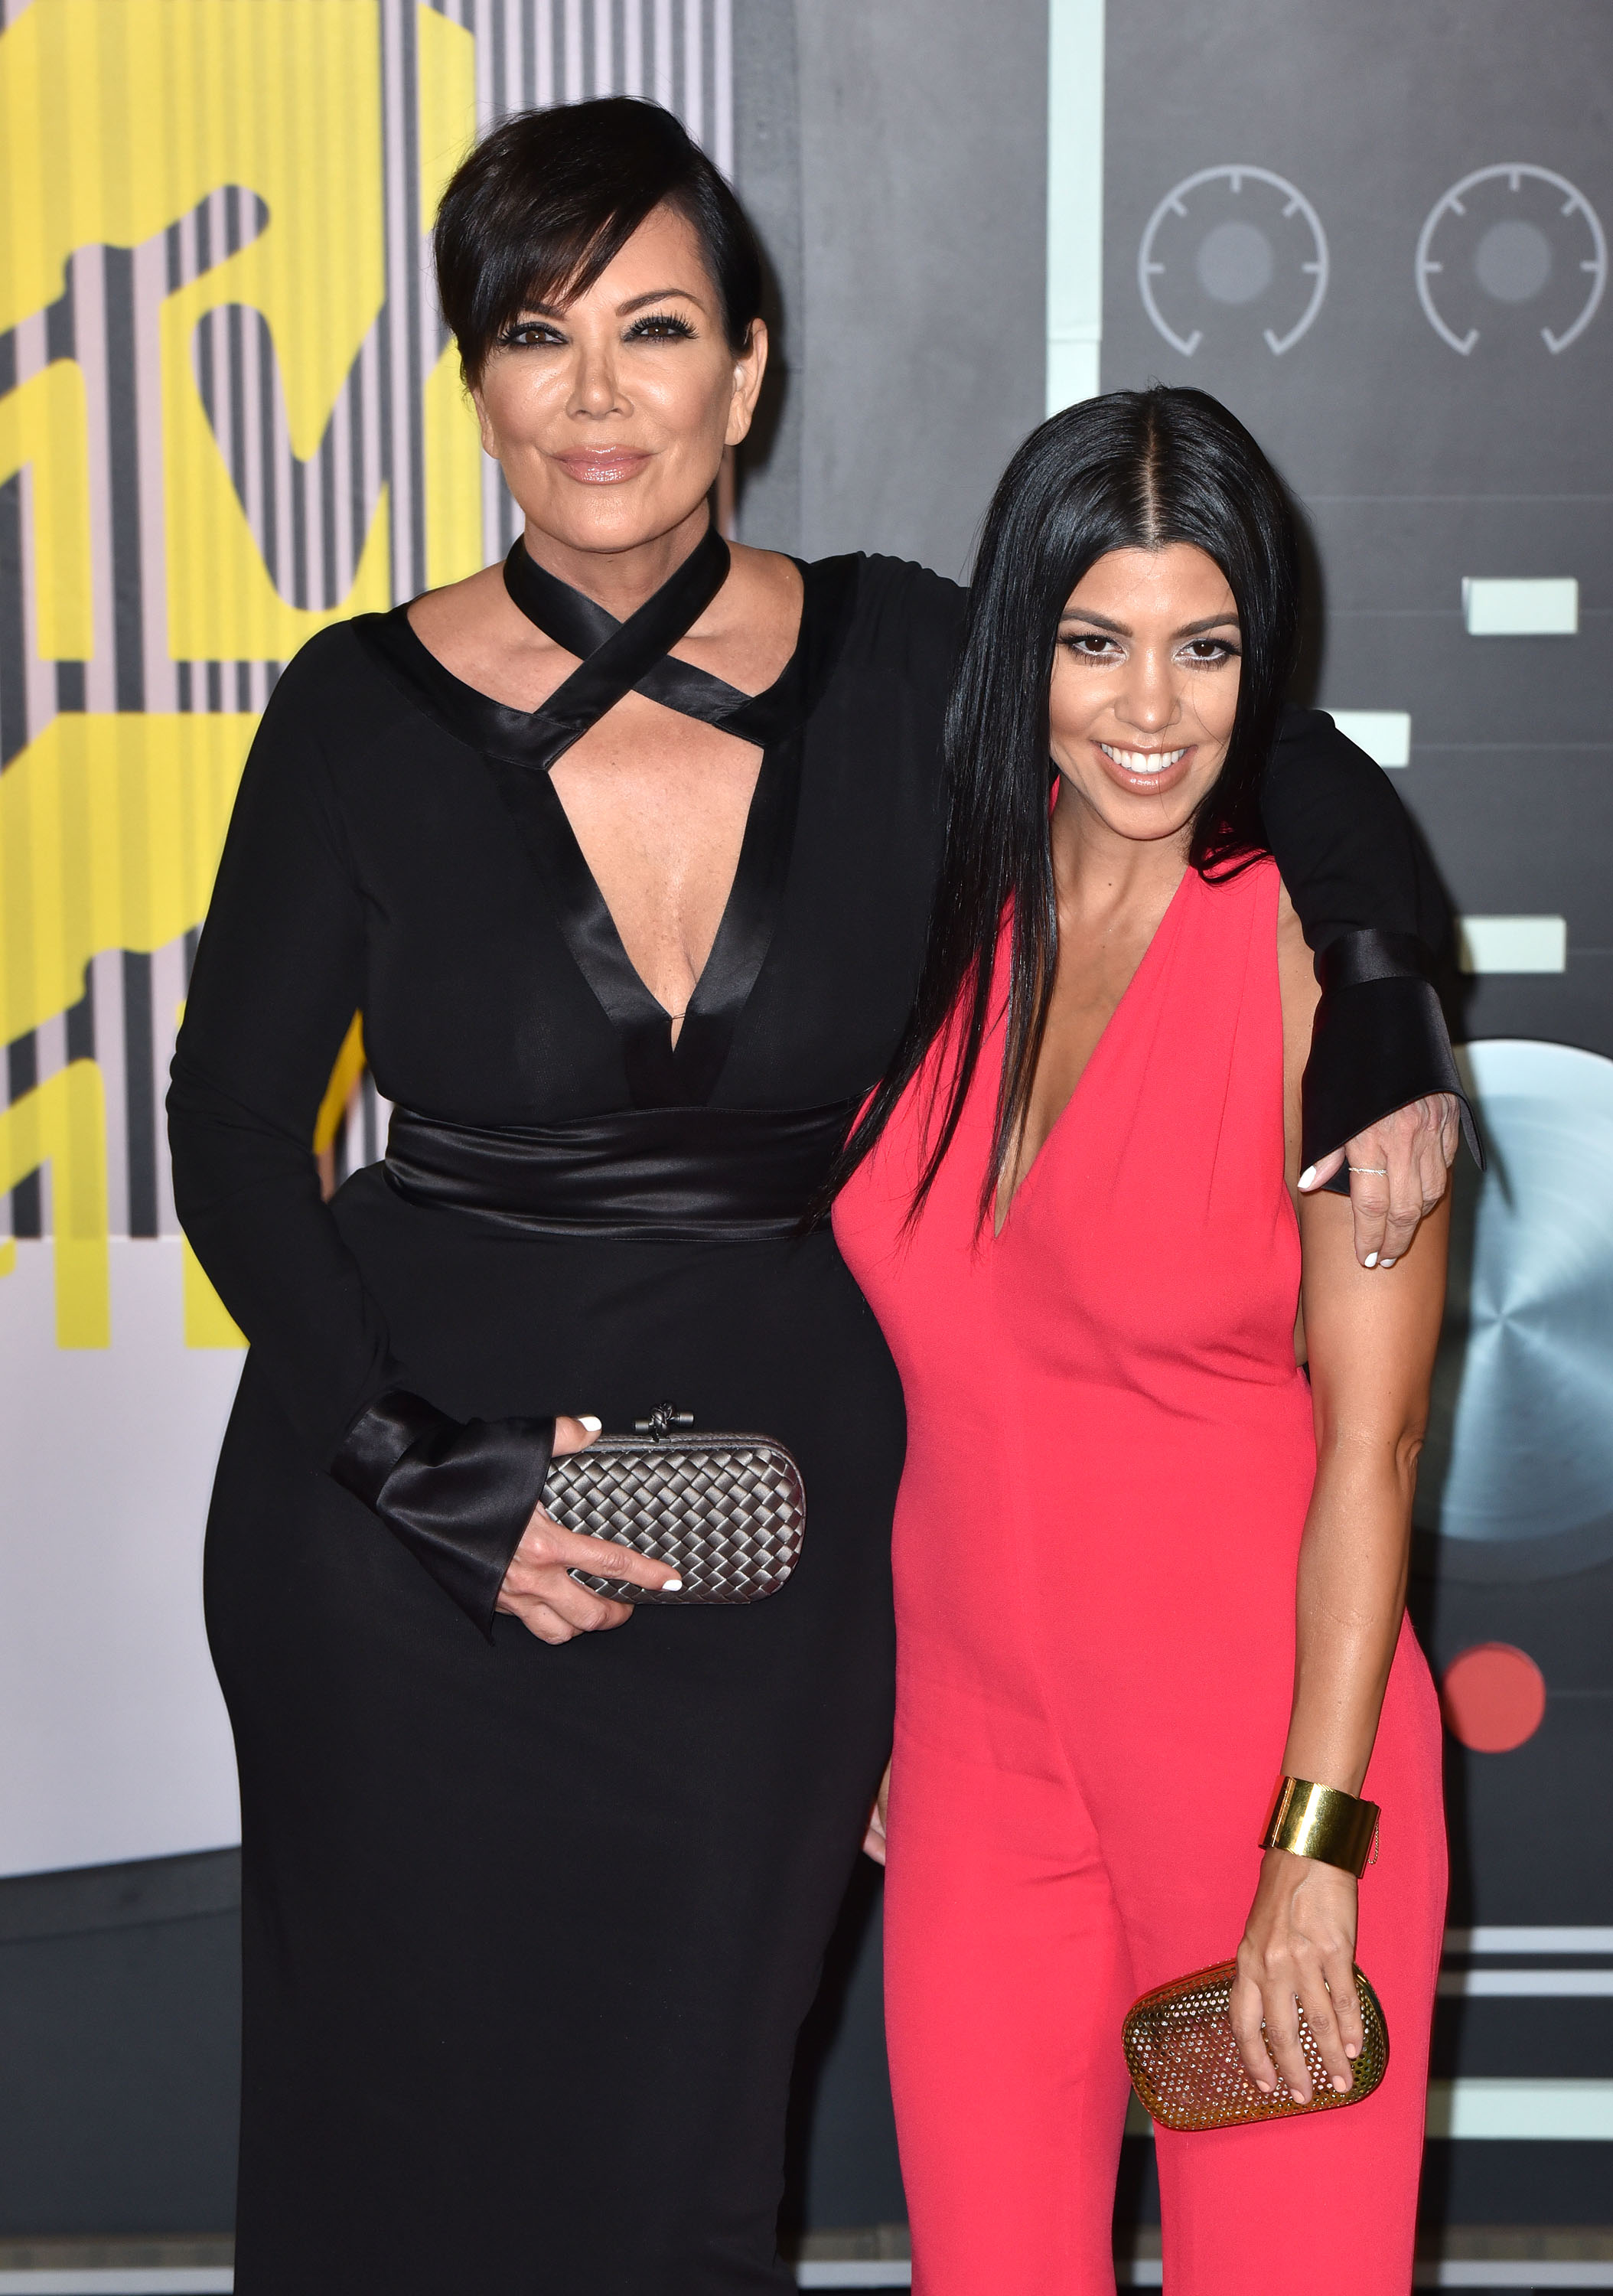 Kris Jenner posed with her daughter Kourtney Kardashian at the  2015 MTV Video Music Awards